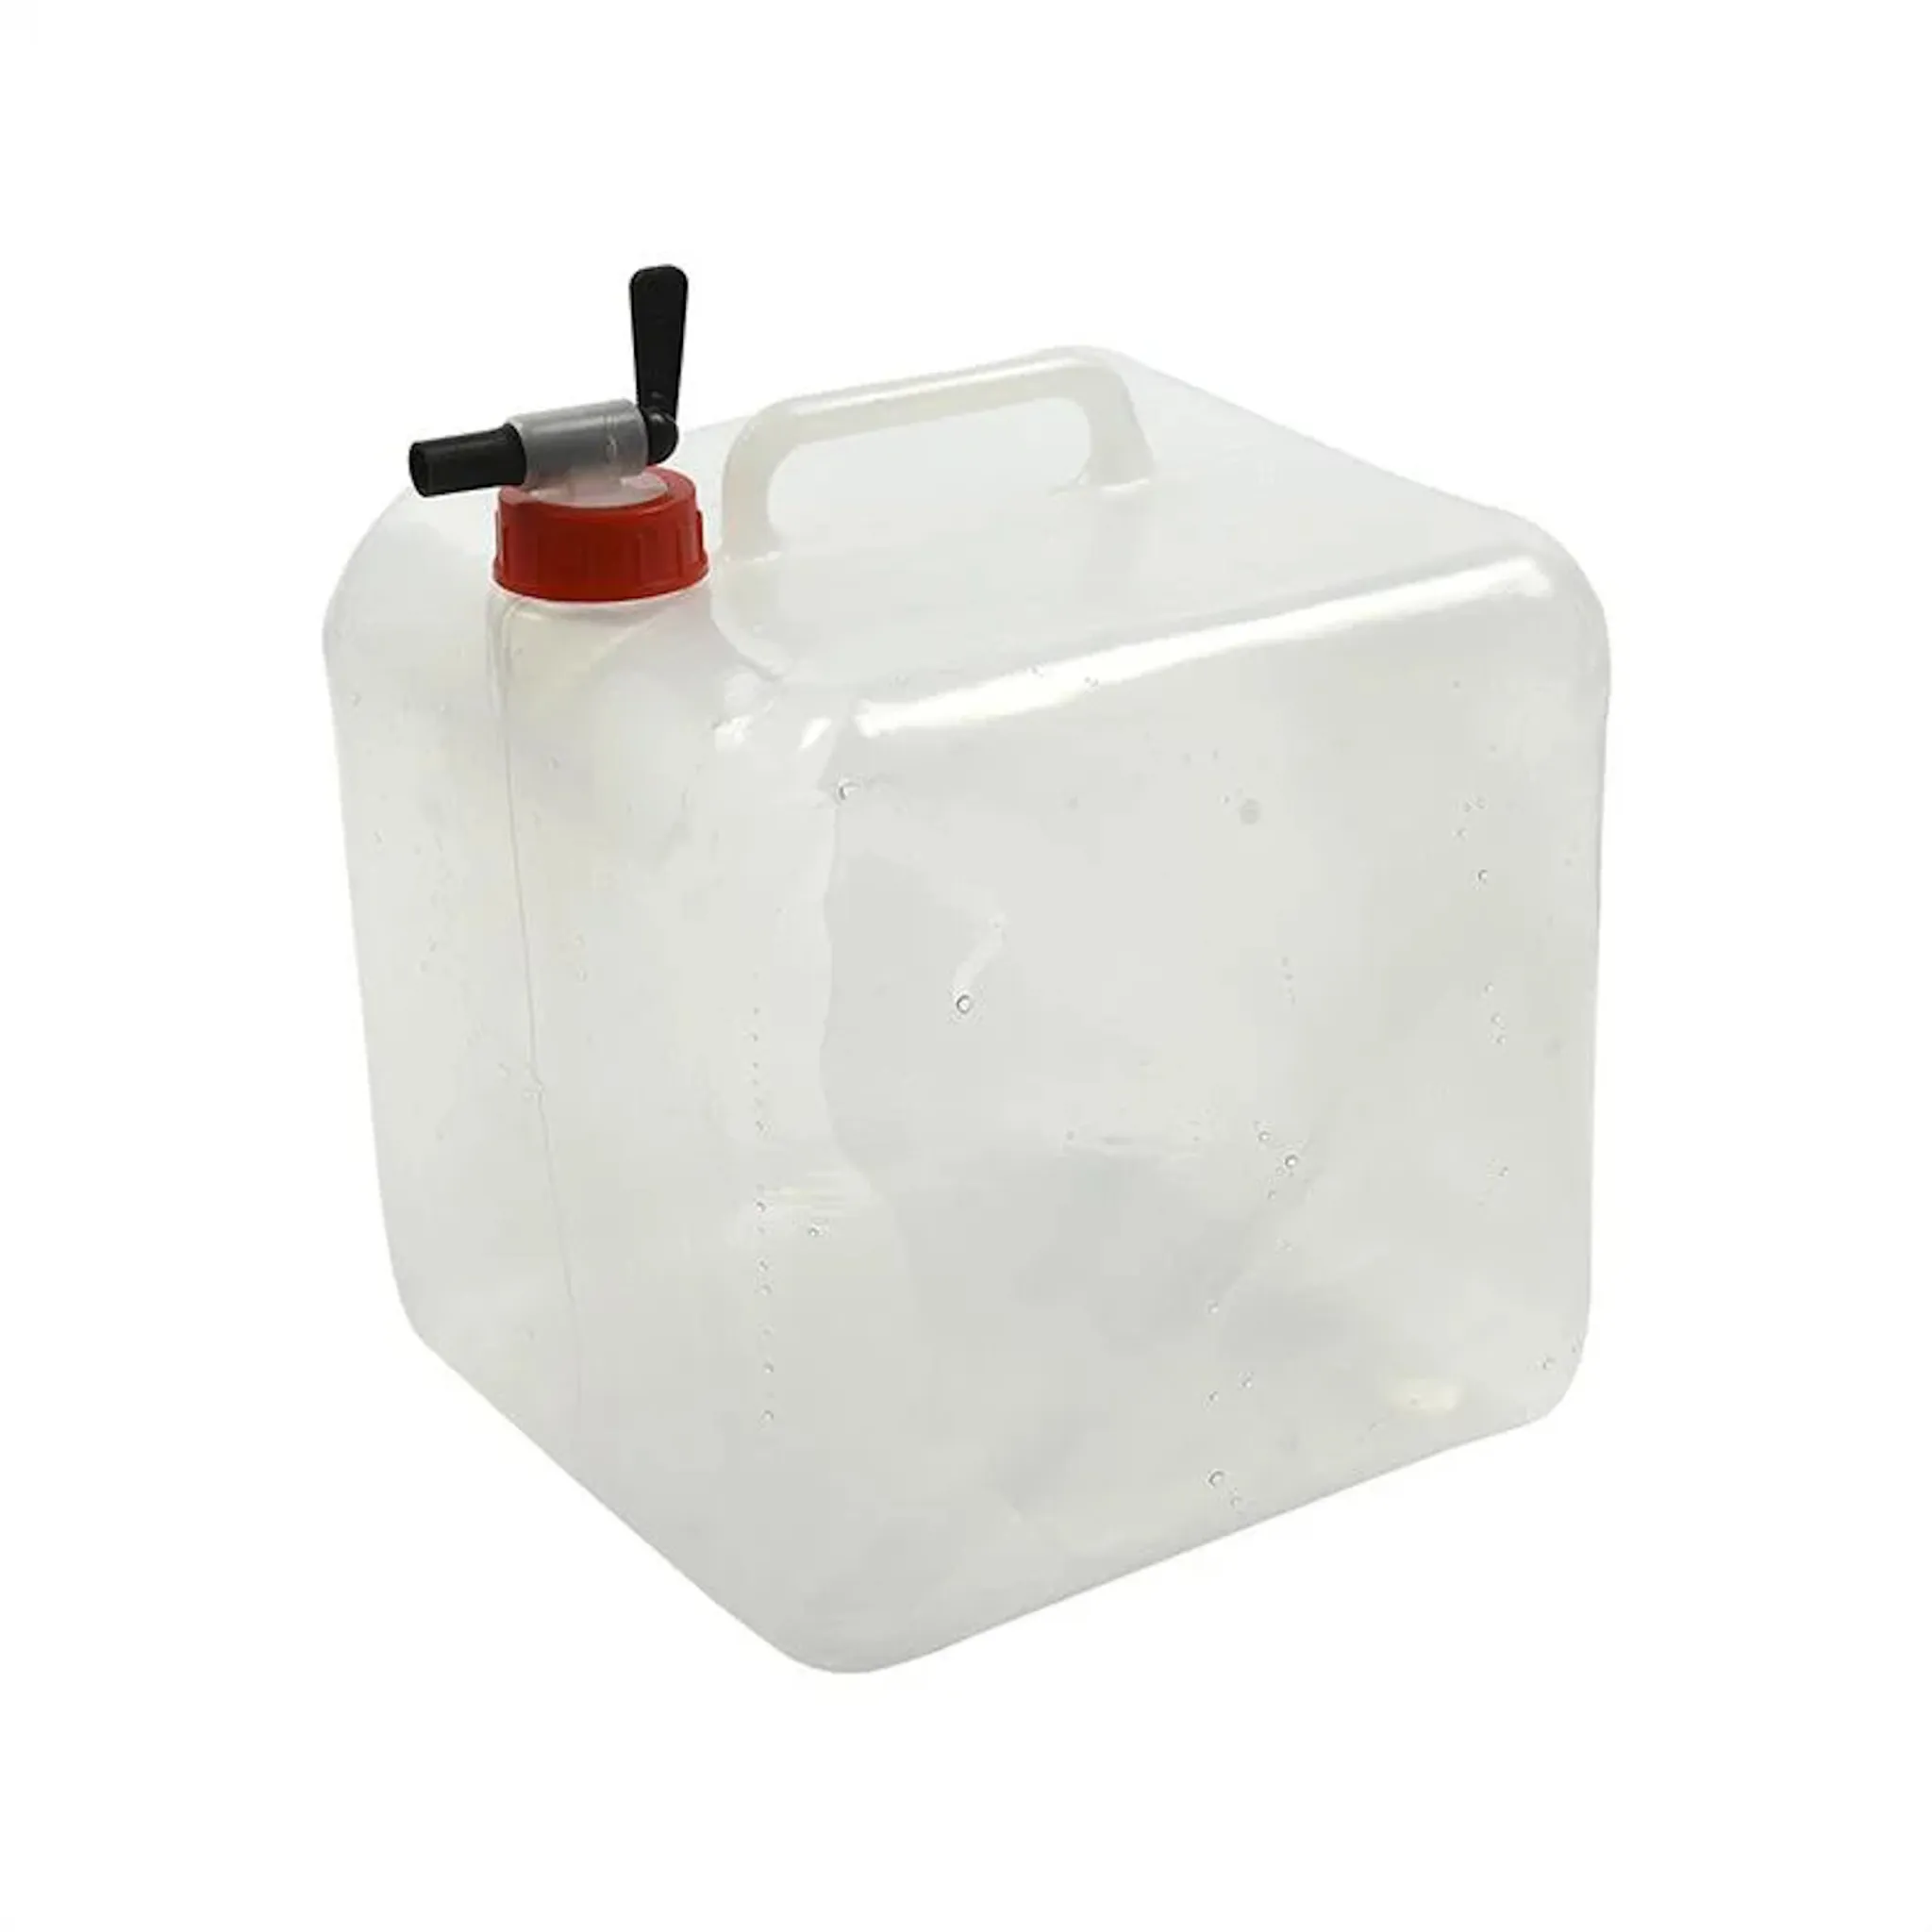 5 x Faltkanister 10 Liter, Wasserkanister faltbar, Kanister mit Hahn,  lebensmittelecht, Camping, PVC, transparent